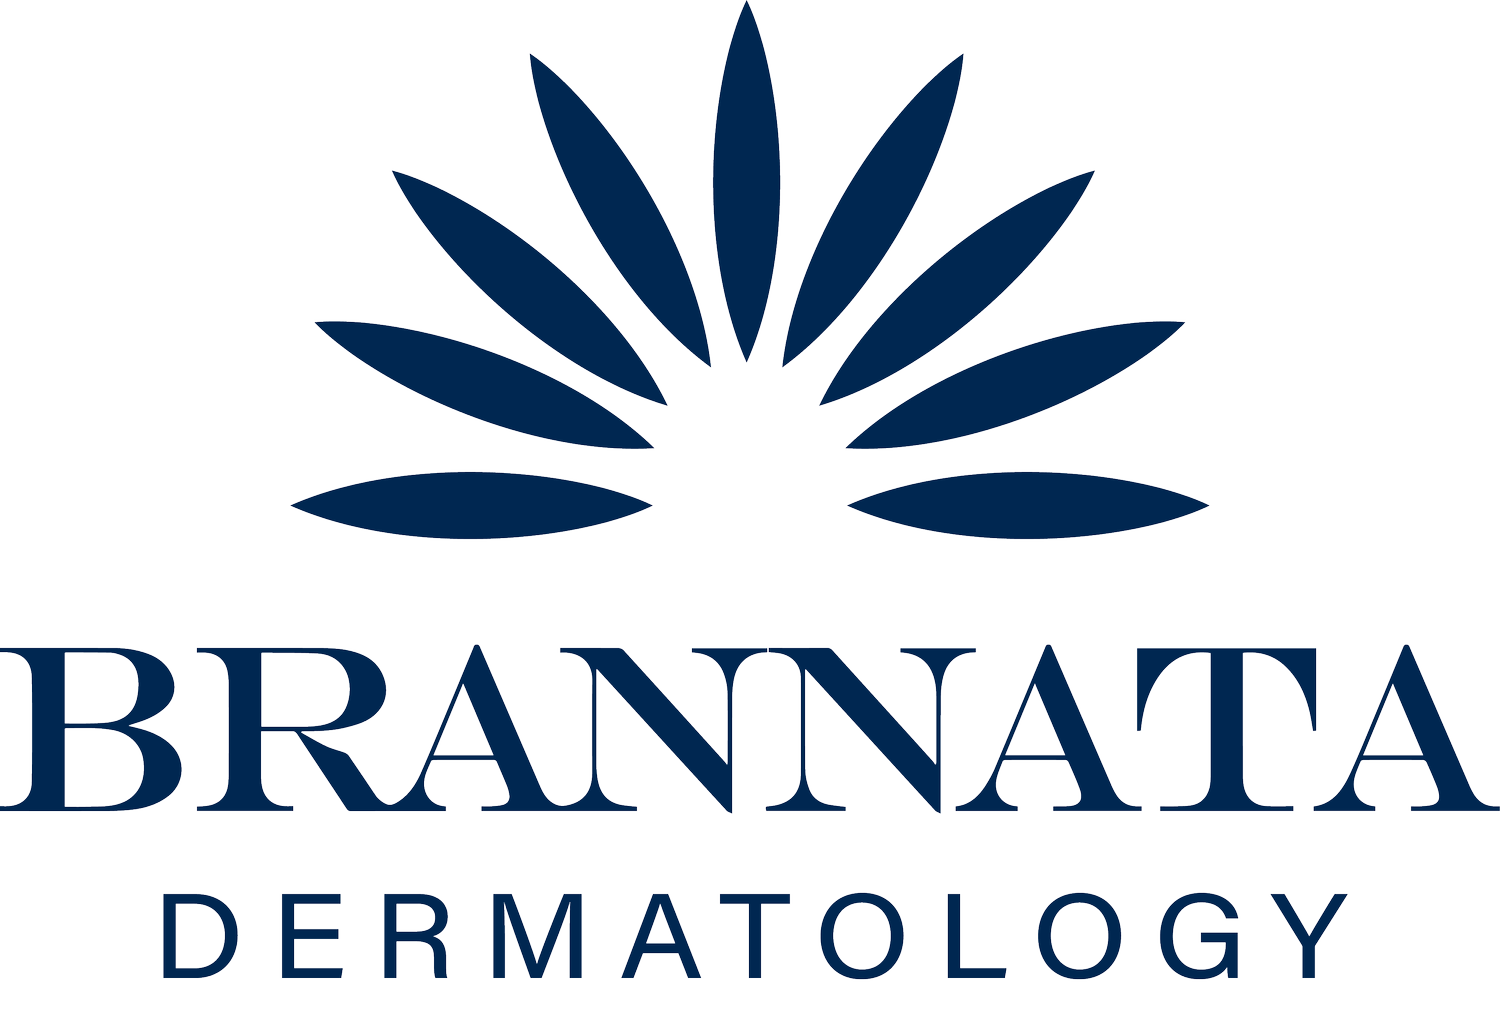 Brannata Dermatology